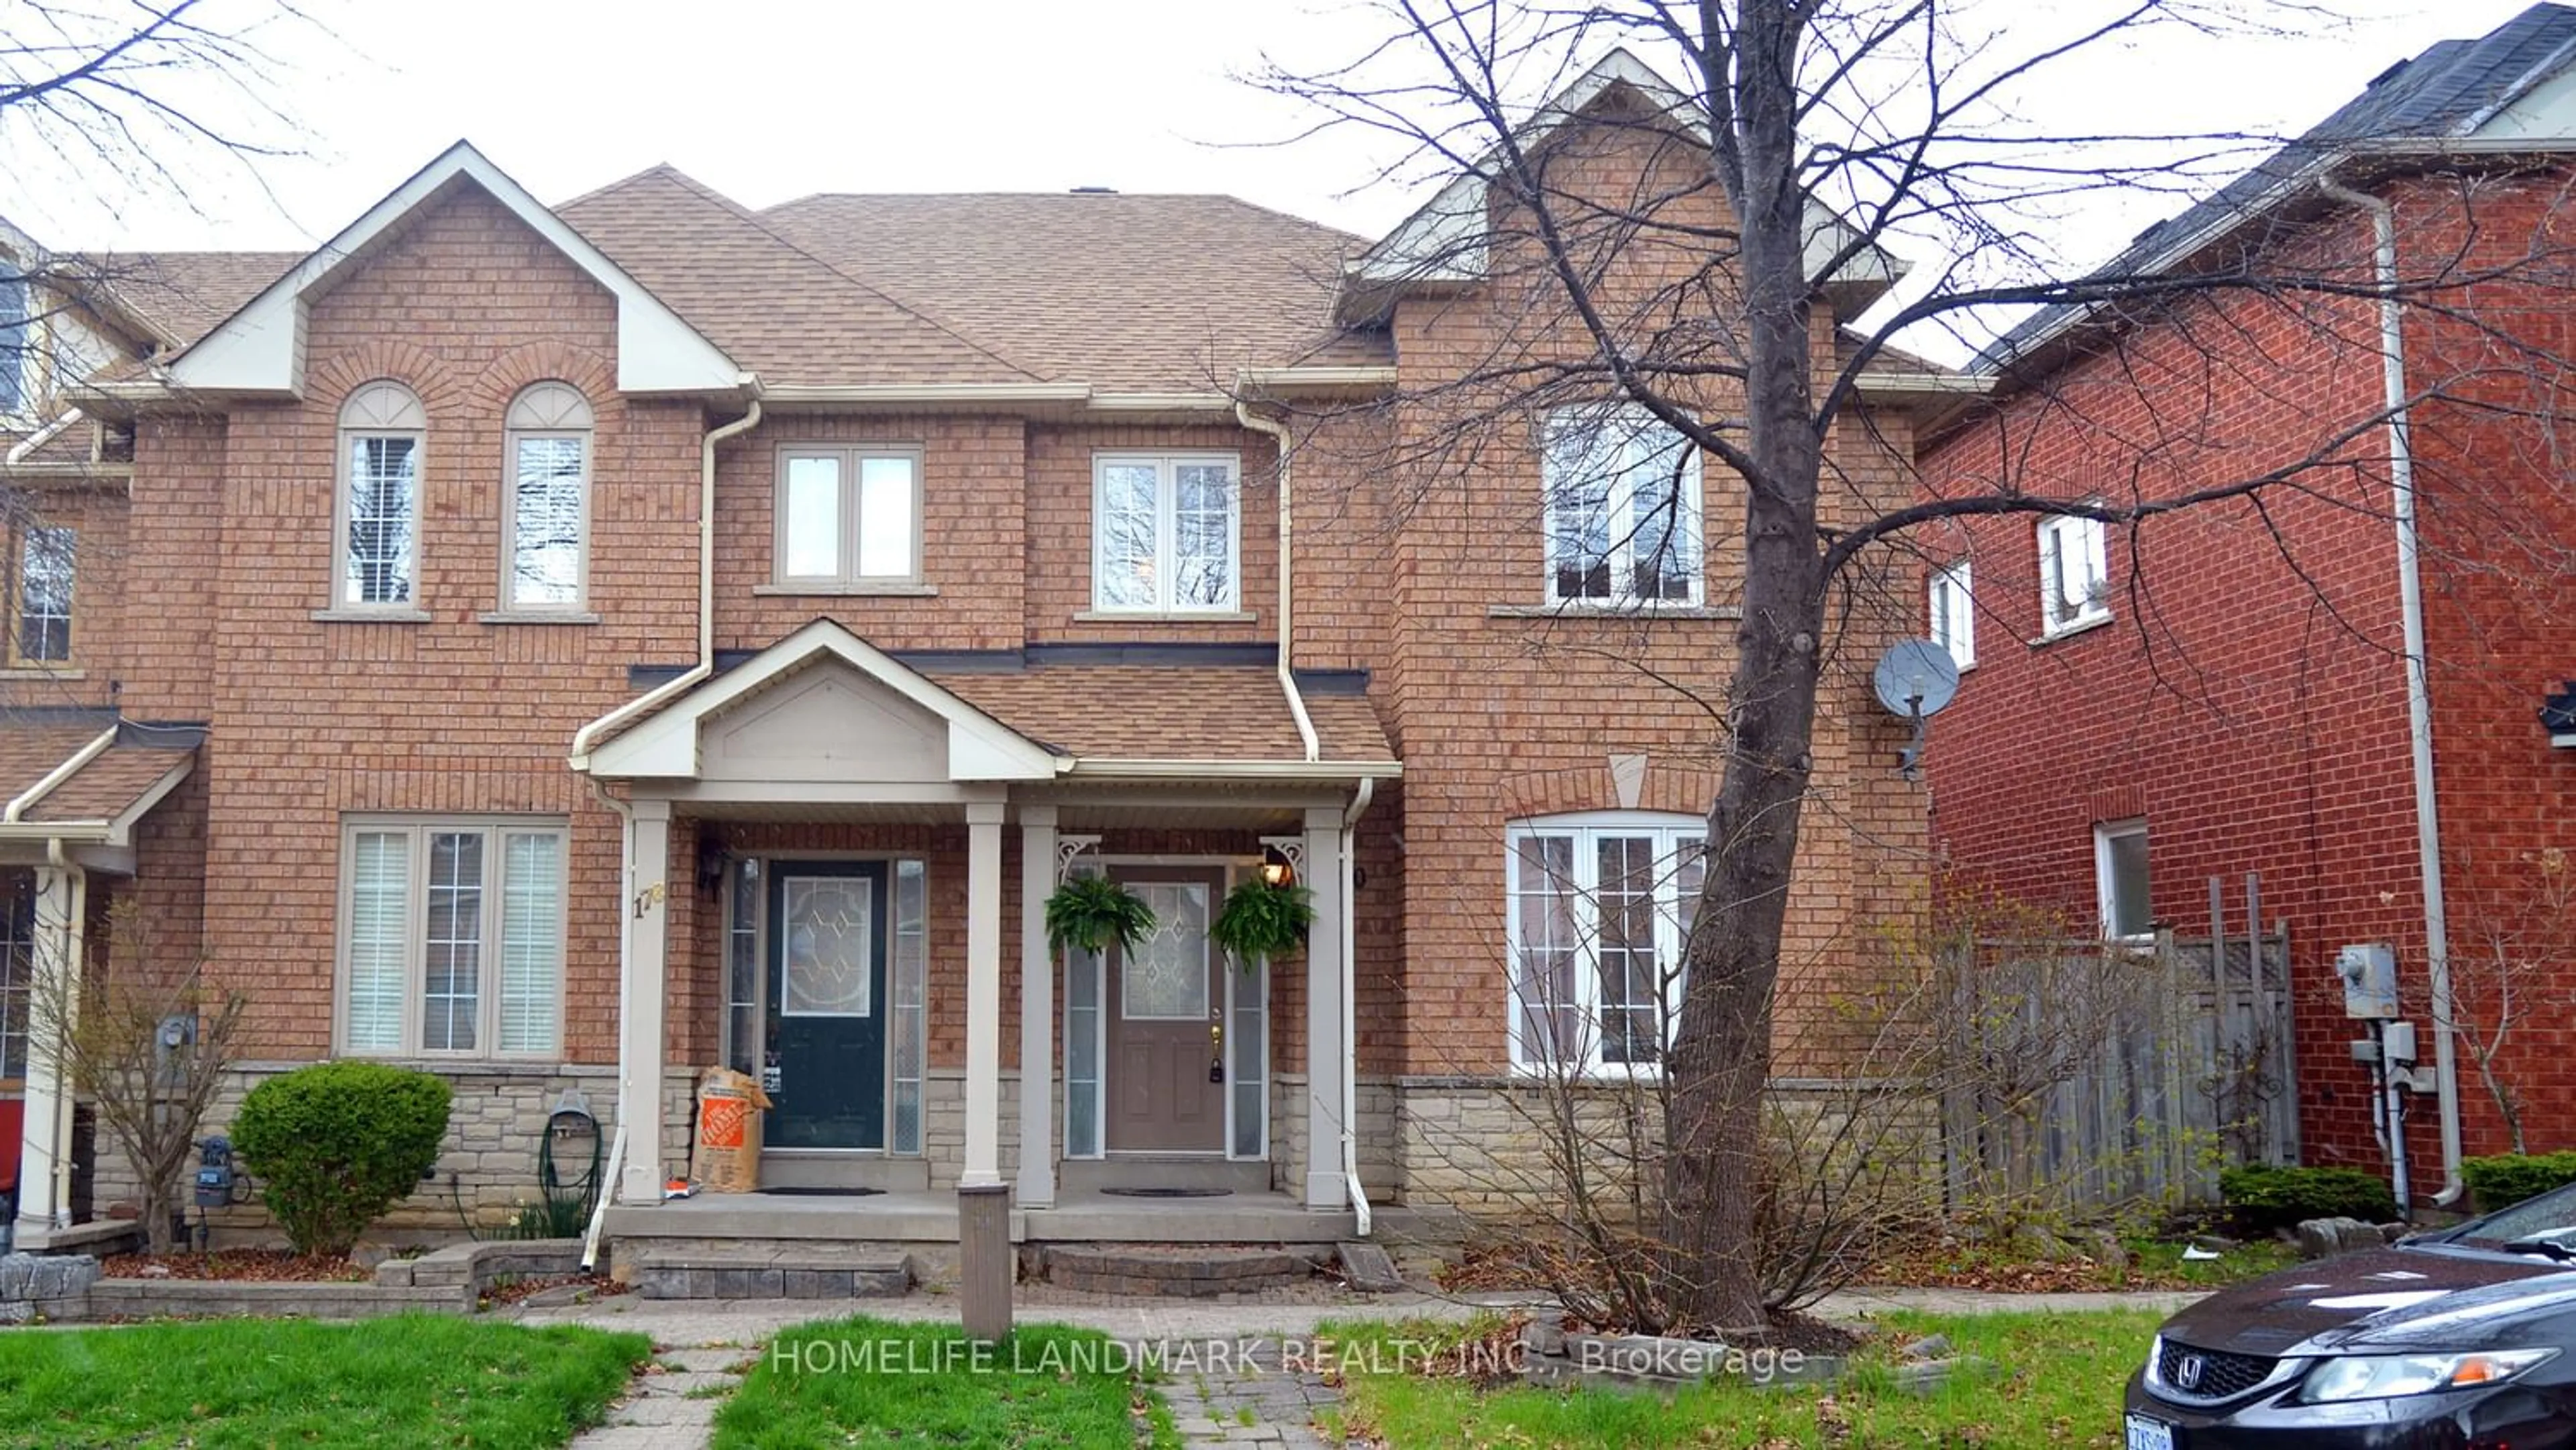 Home with brick exterior material for 180 Trail Ridge Lane, Markham Ontario L6C 2C5